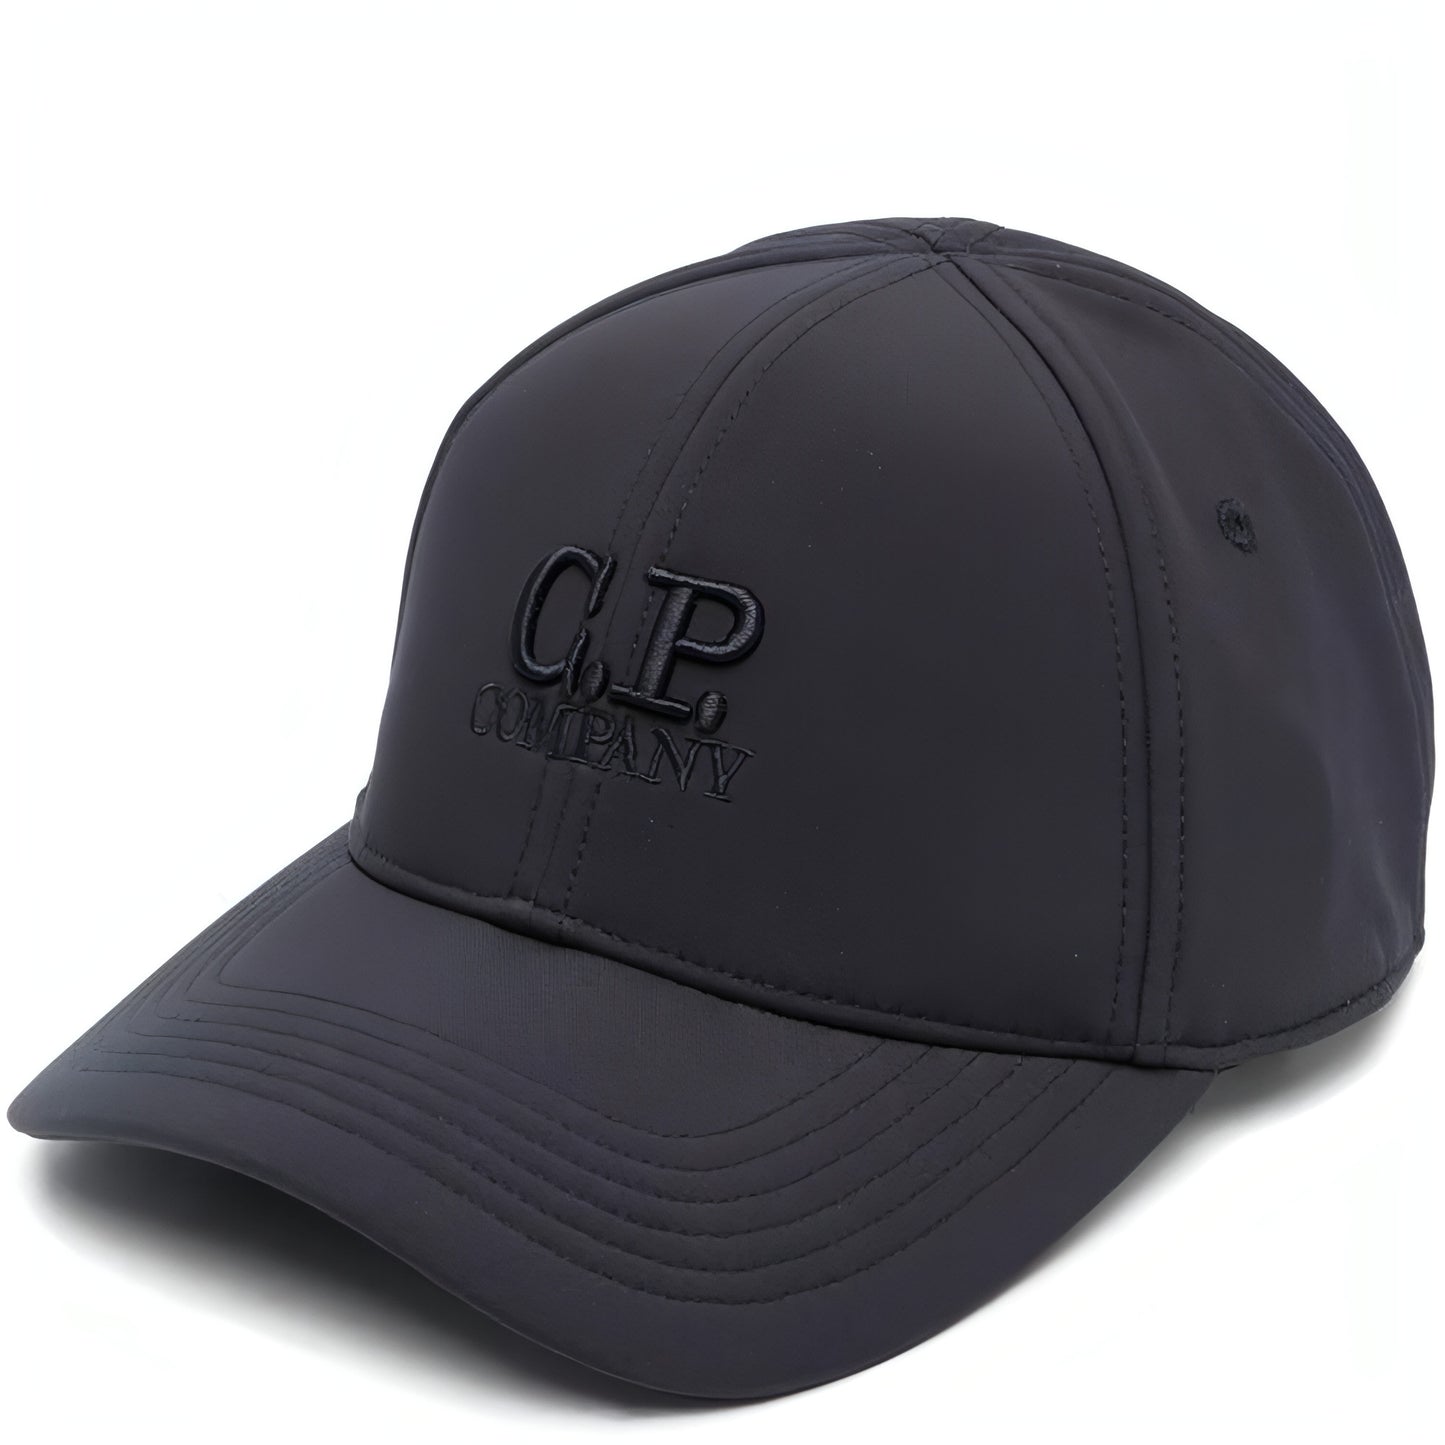 C.P. COMPANY vyriška pilka kepurė su snapeliu Baseball cap